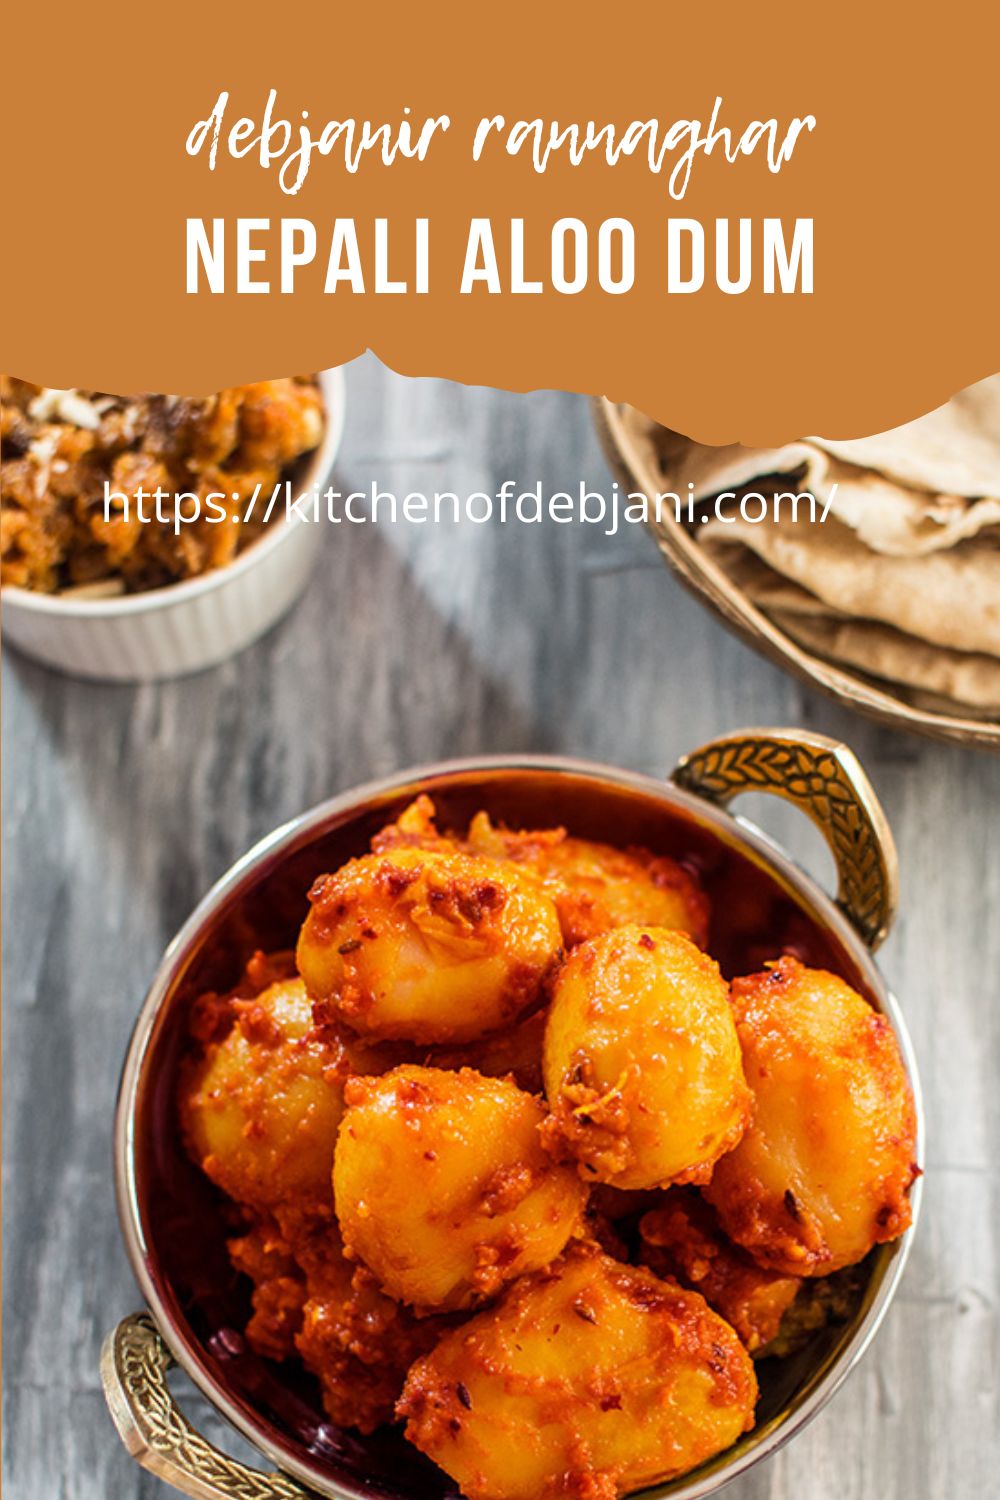 %Nepali Aloo Dum recipe debjanir rannaghar Pinterest Pin